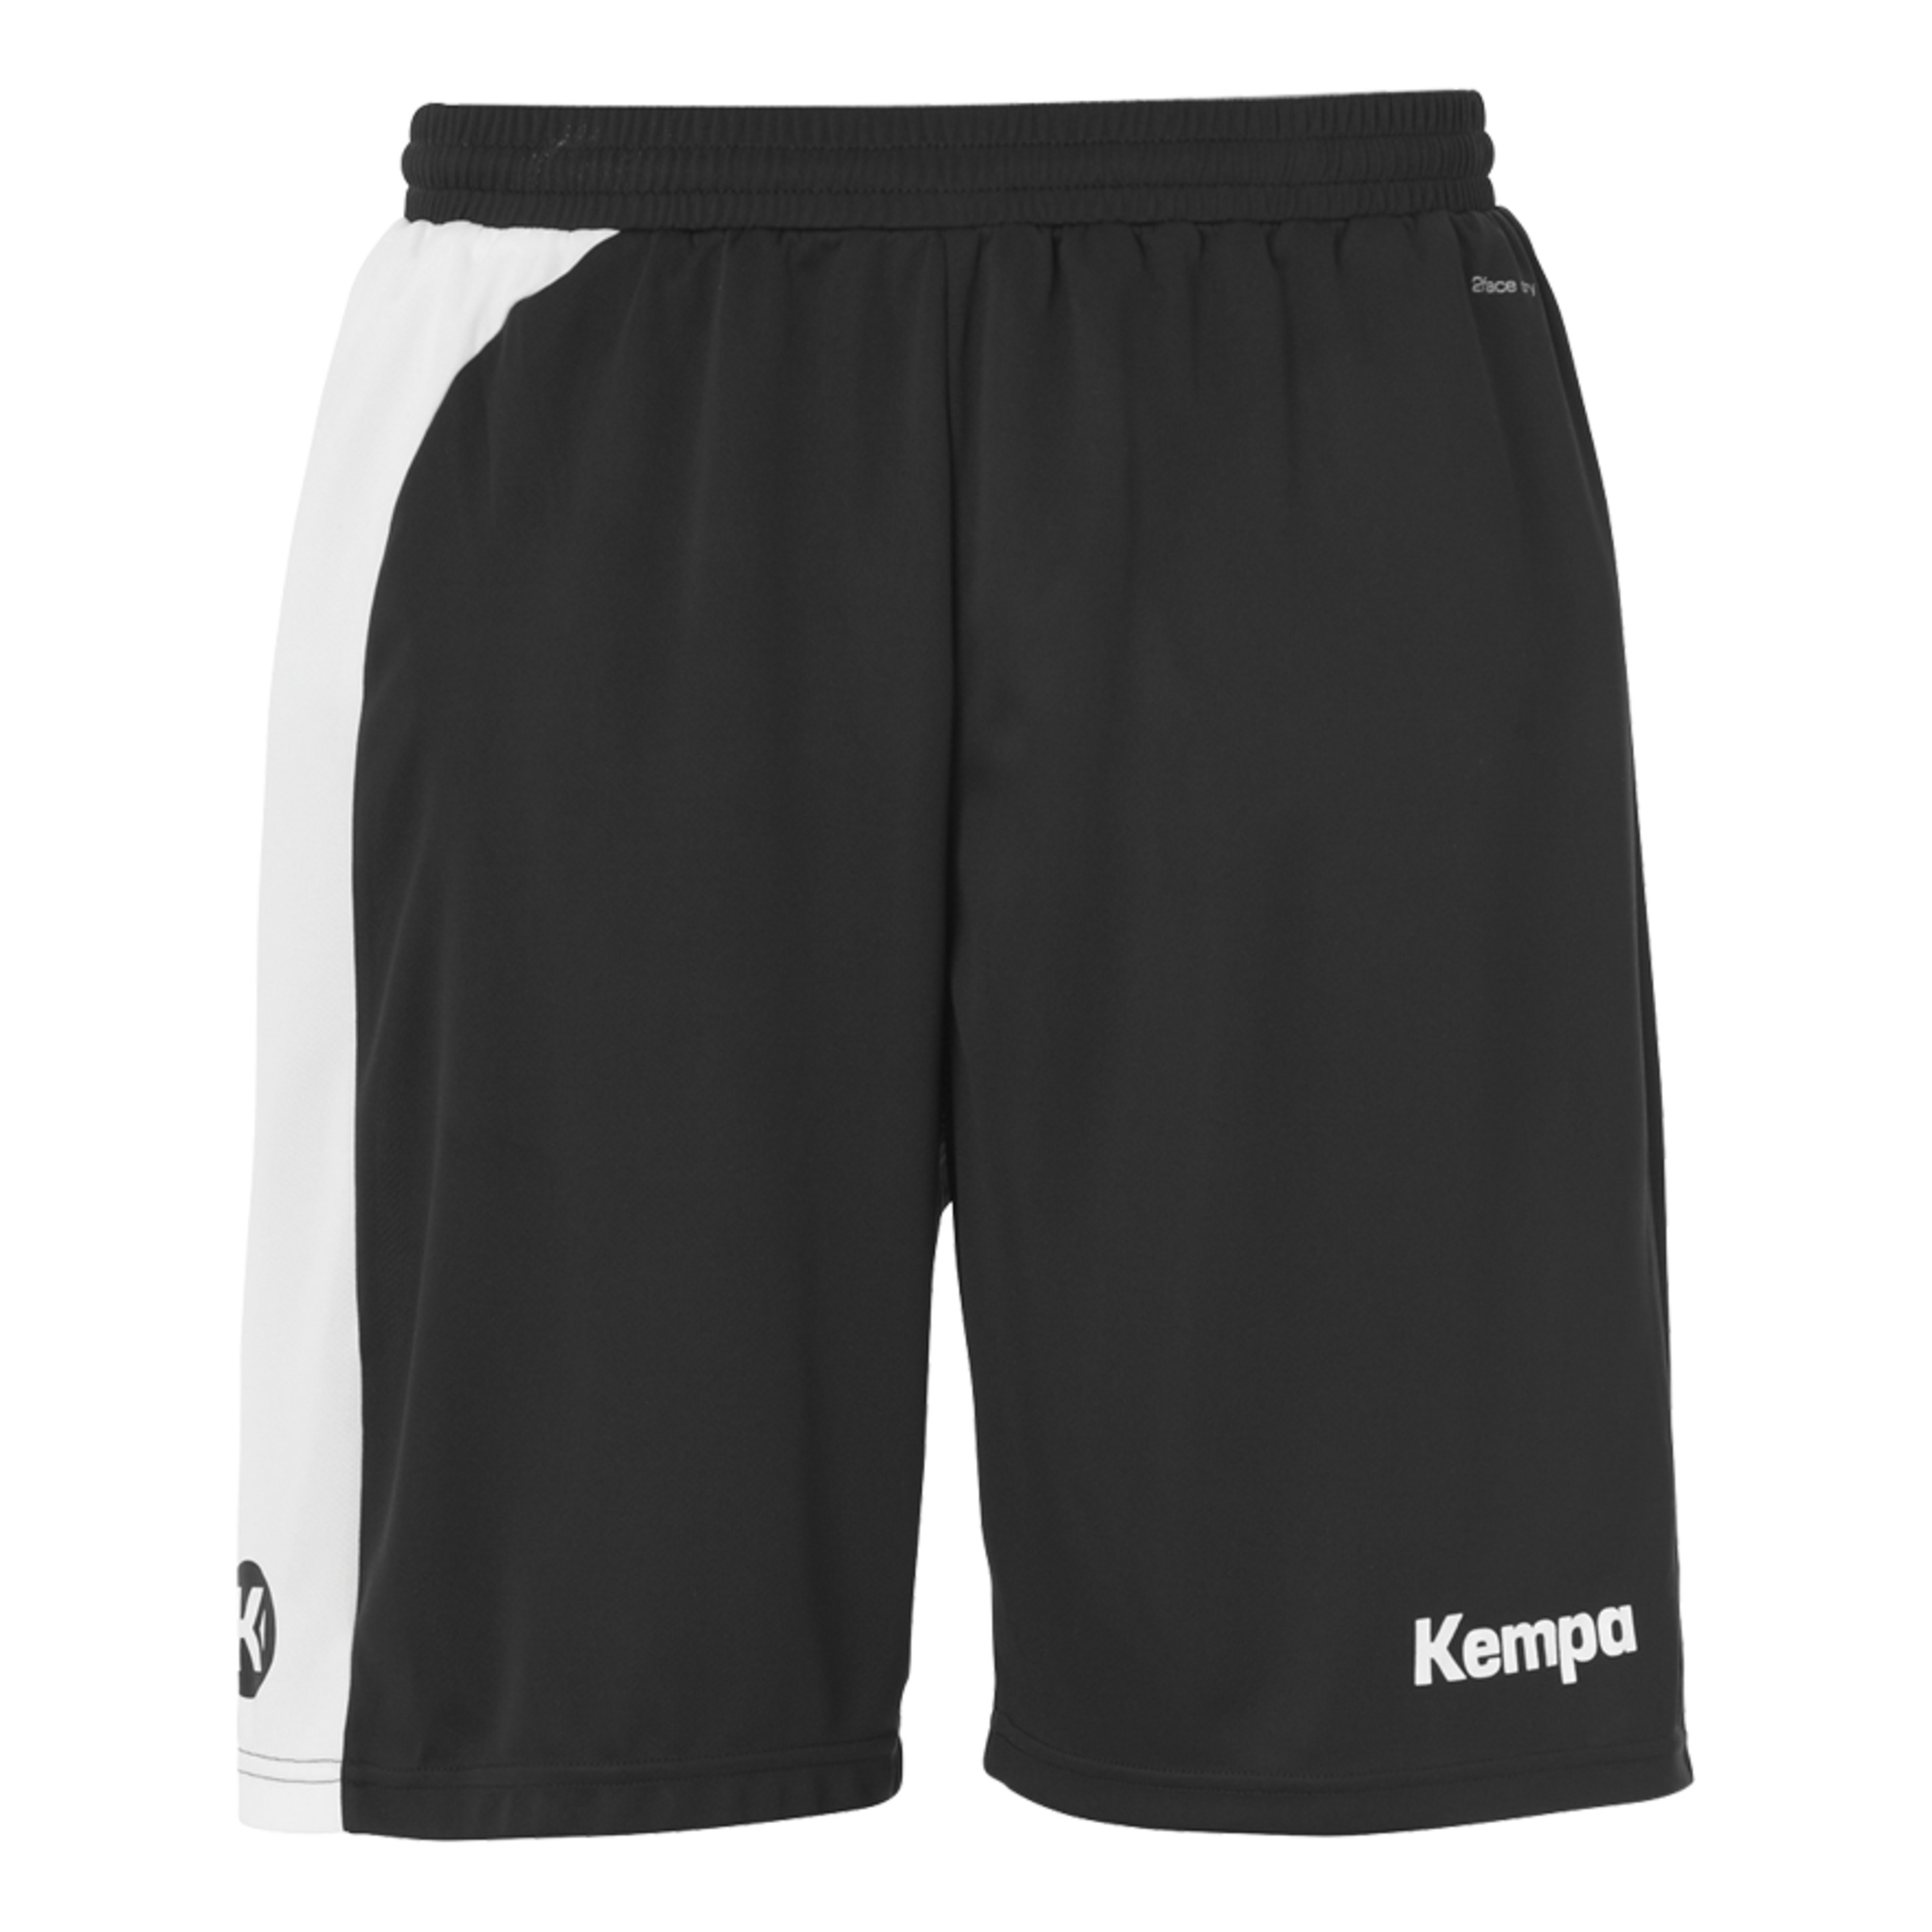 Peak Shorts Negro/blanco Kempa